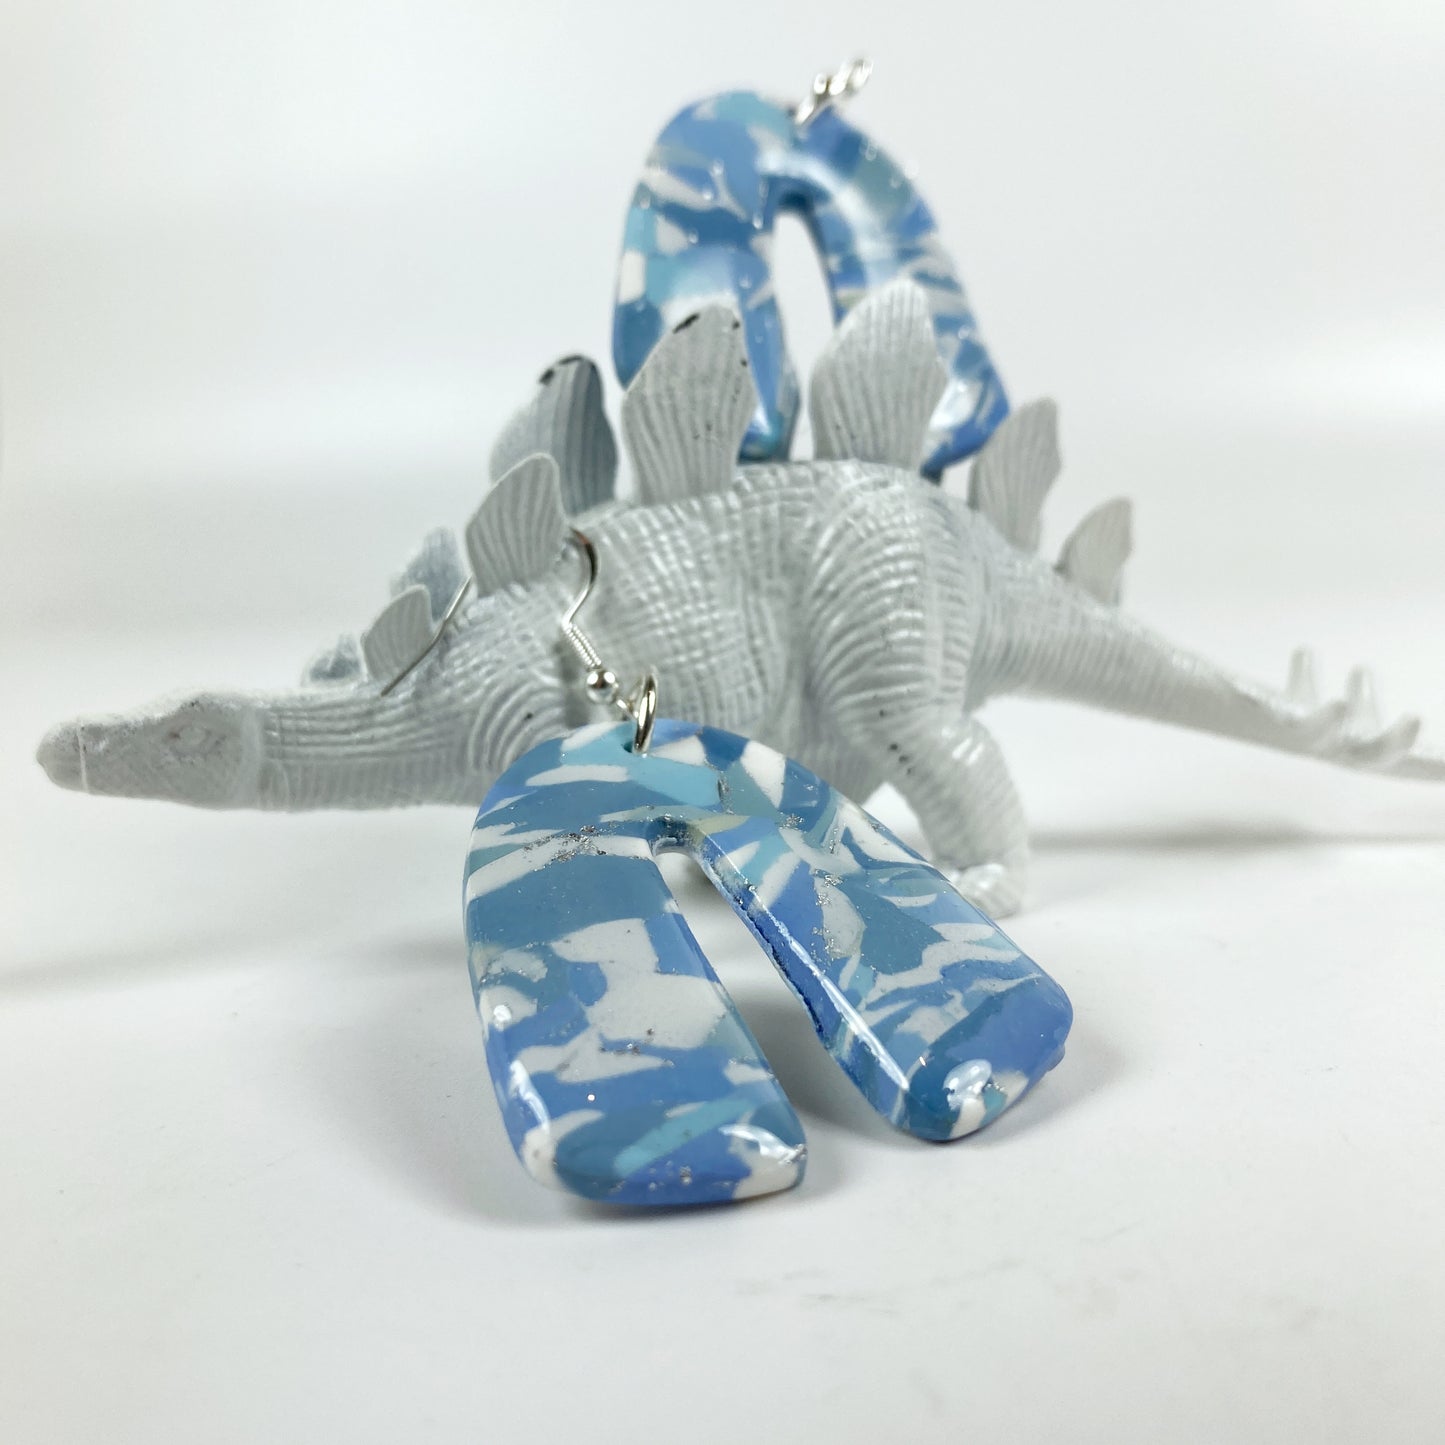 Moody Blue Handmade Polymer Clay Dangle Rainbow Shaped Earrings with dinosaur